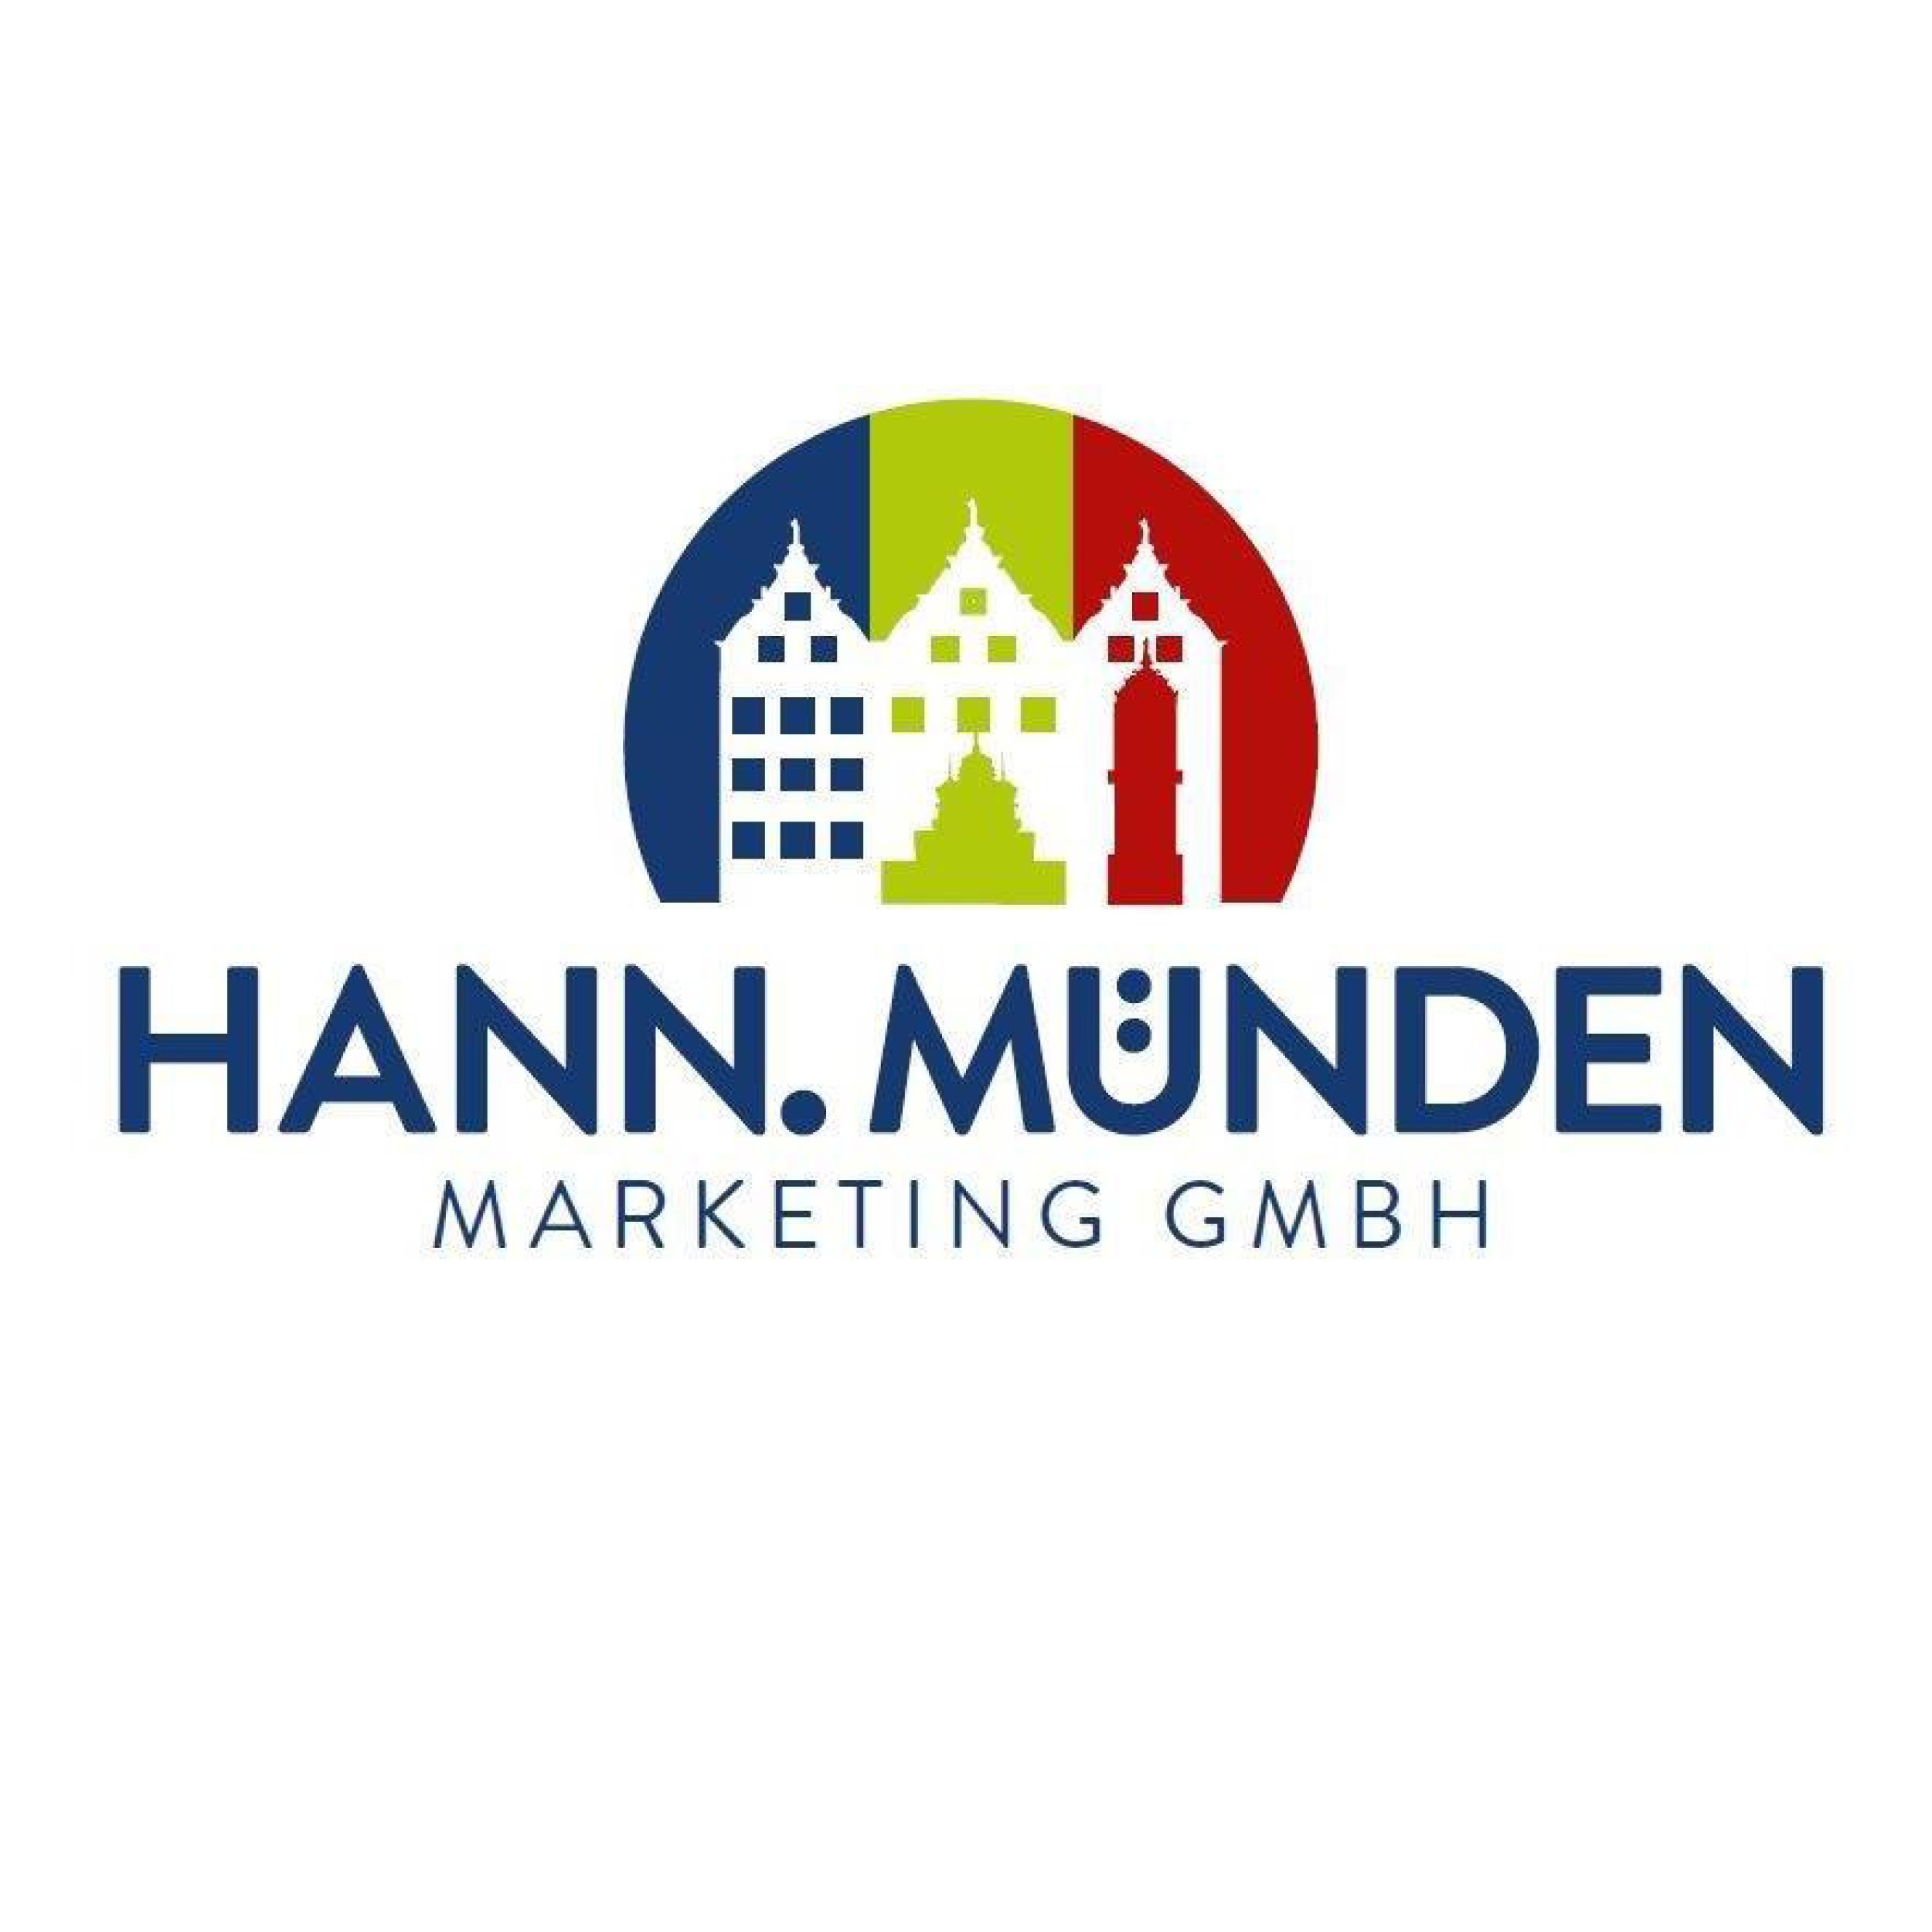  Hann. Münden Marketing GmbH